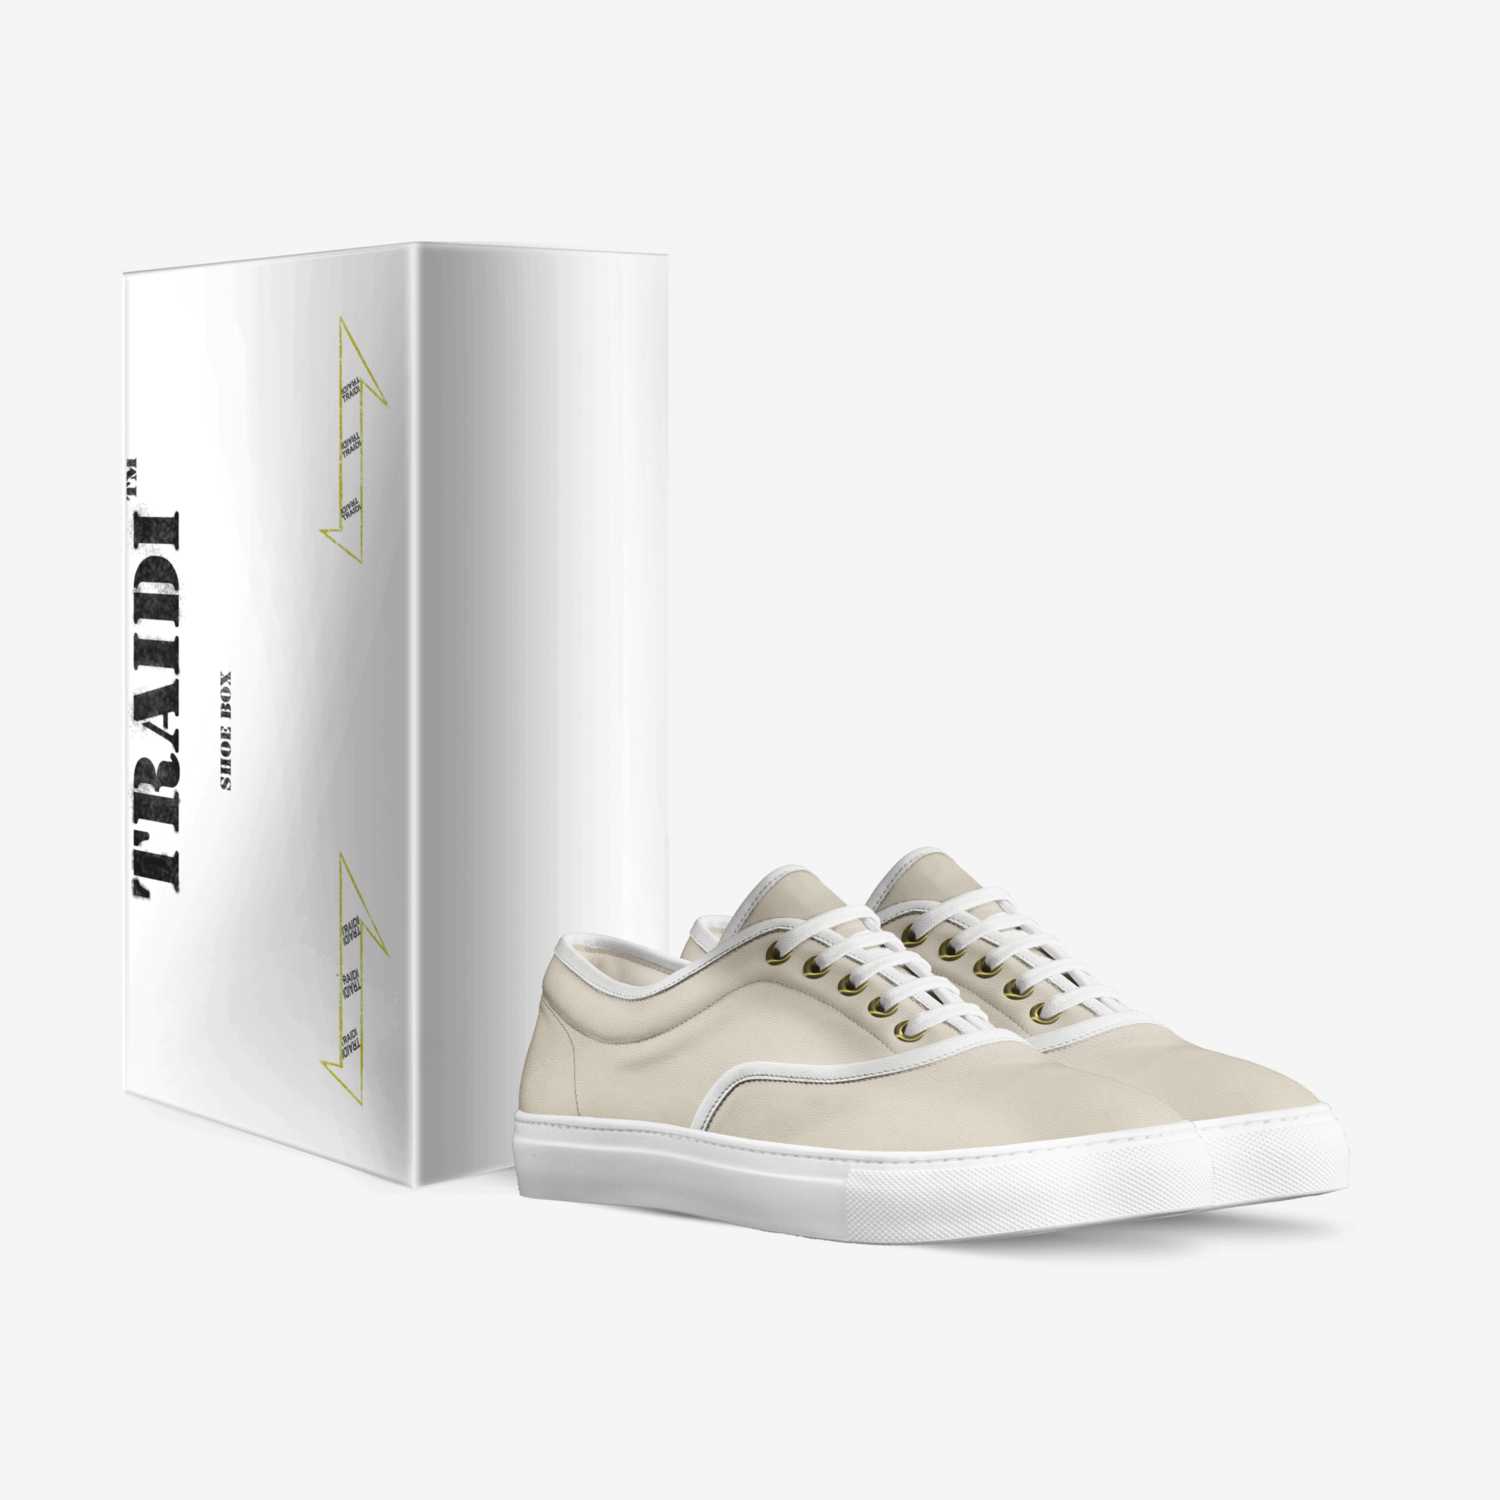 traidi custom made in Italy shoes by Traidi ™ | Box view